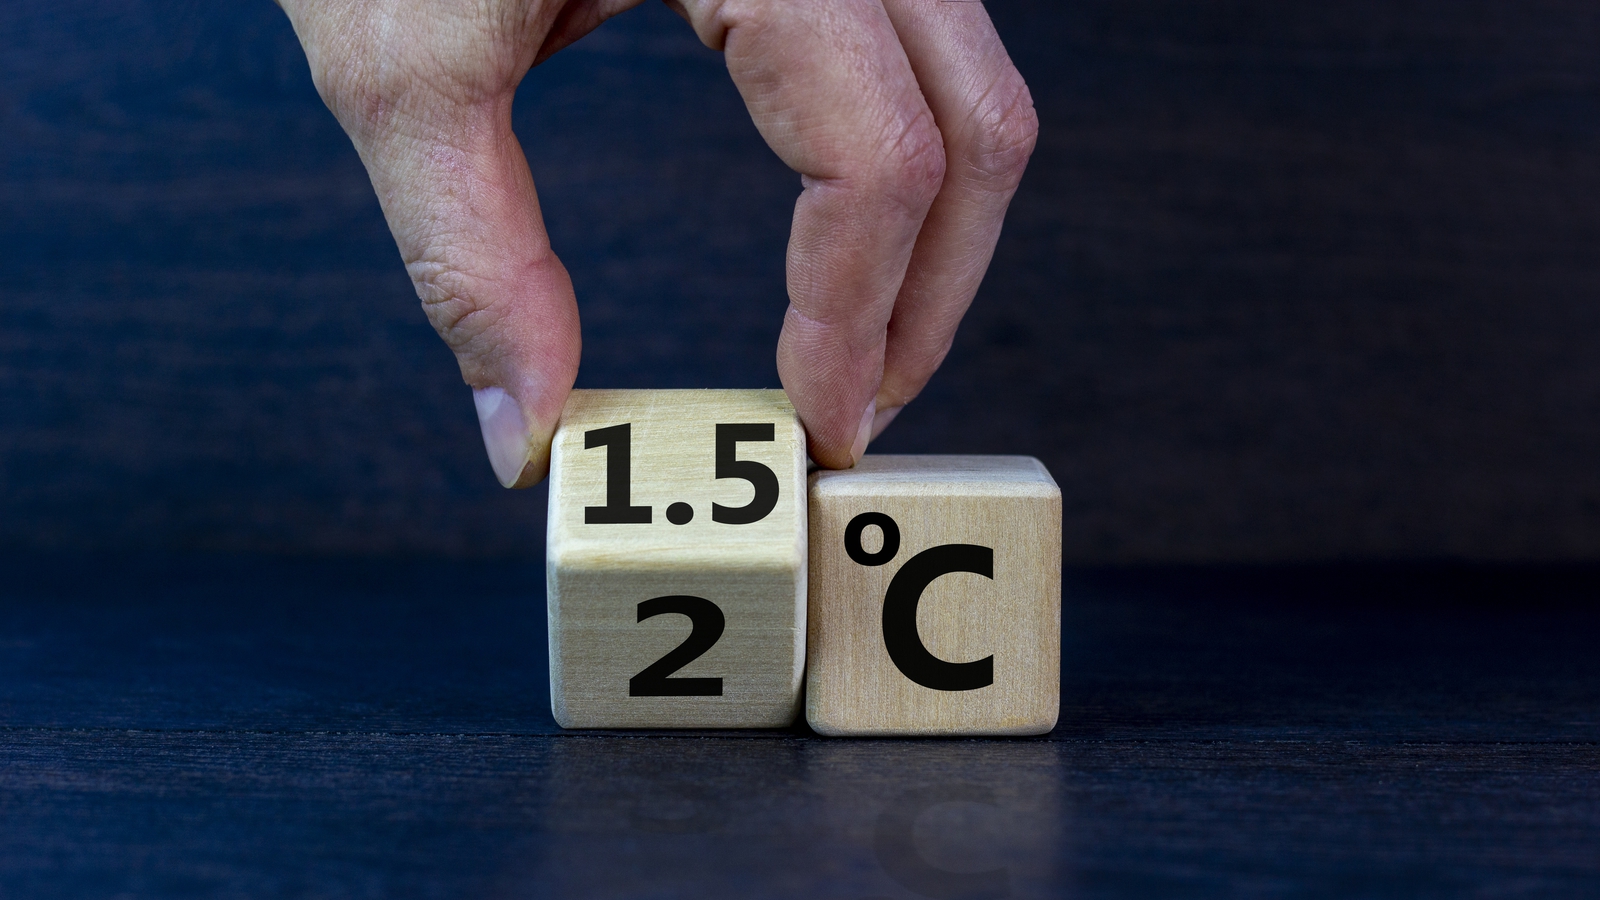 Study warns global warming on track to cross 2C - RTE.ie